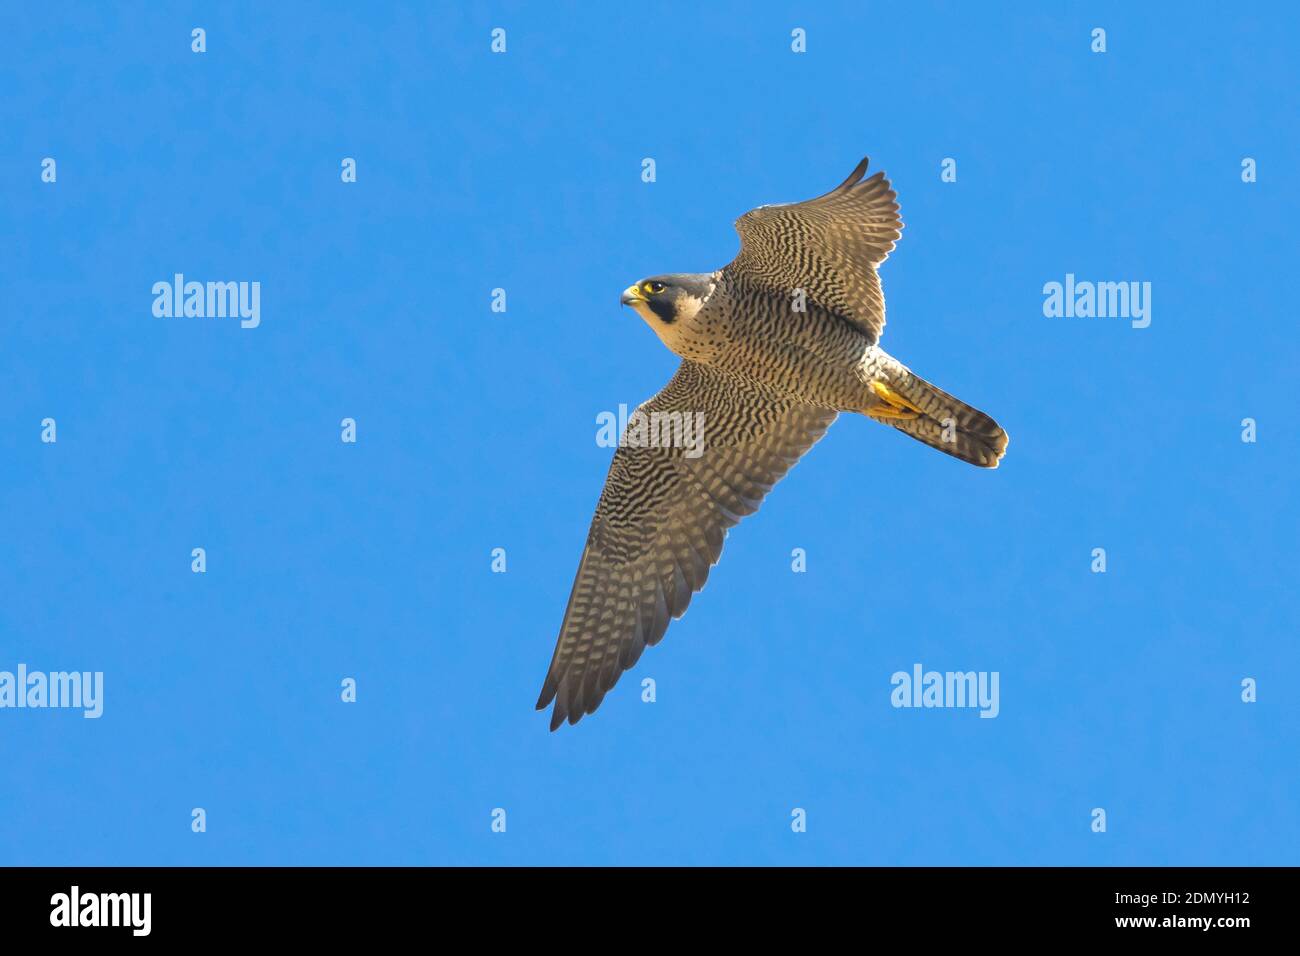 Peregrine Falcon in flight, seen from below. Stock Photo